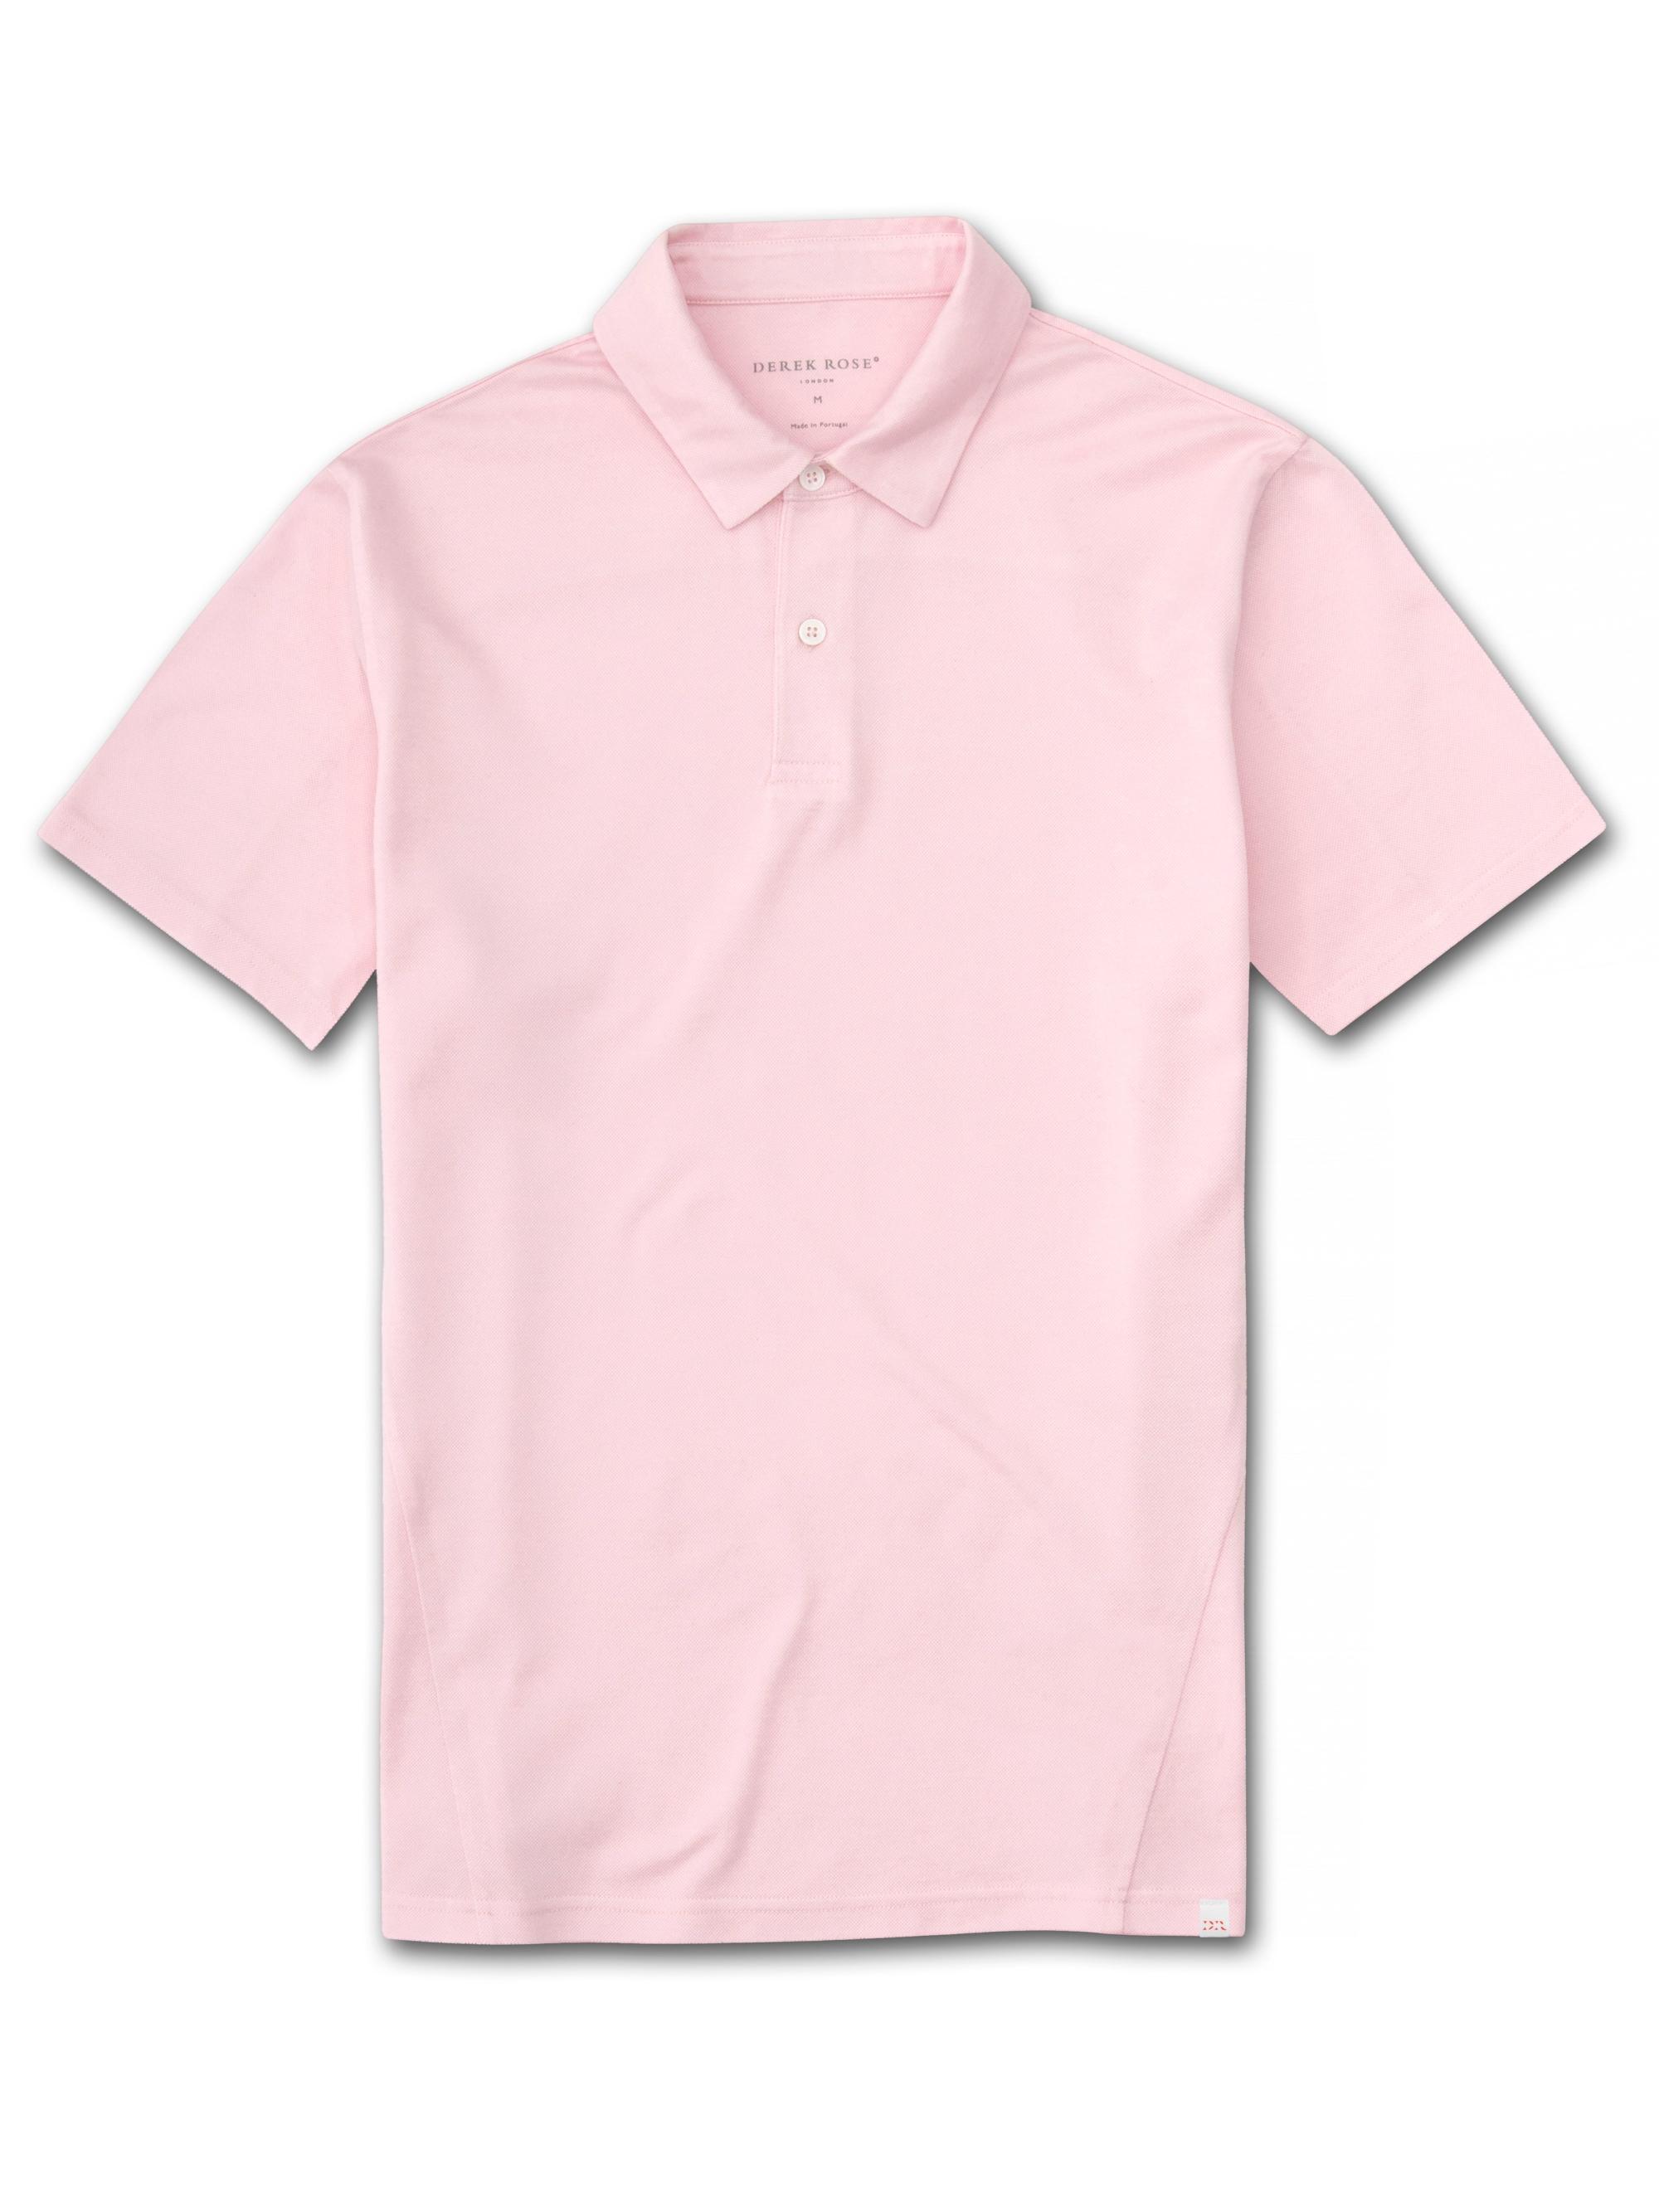 Derek Rose Short Sleeve Polo Shirt Ramsay Pique Cotton Pink for Men - Lyst